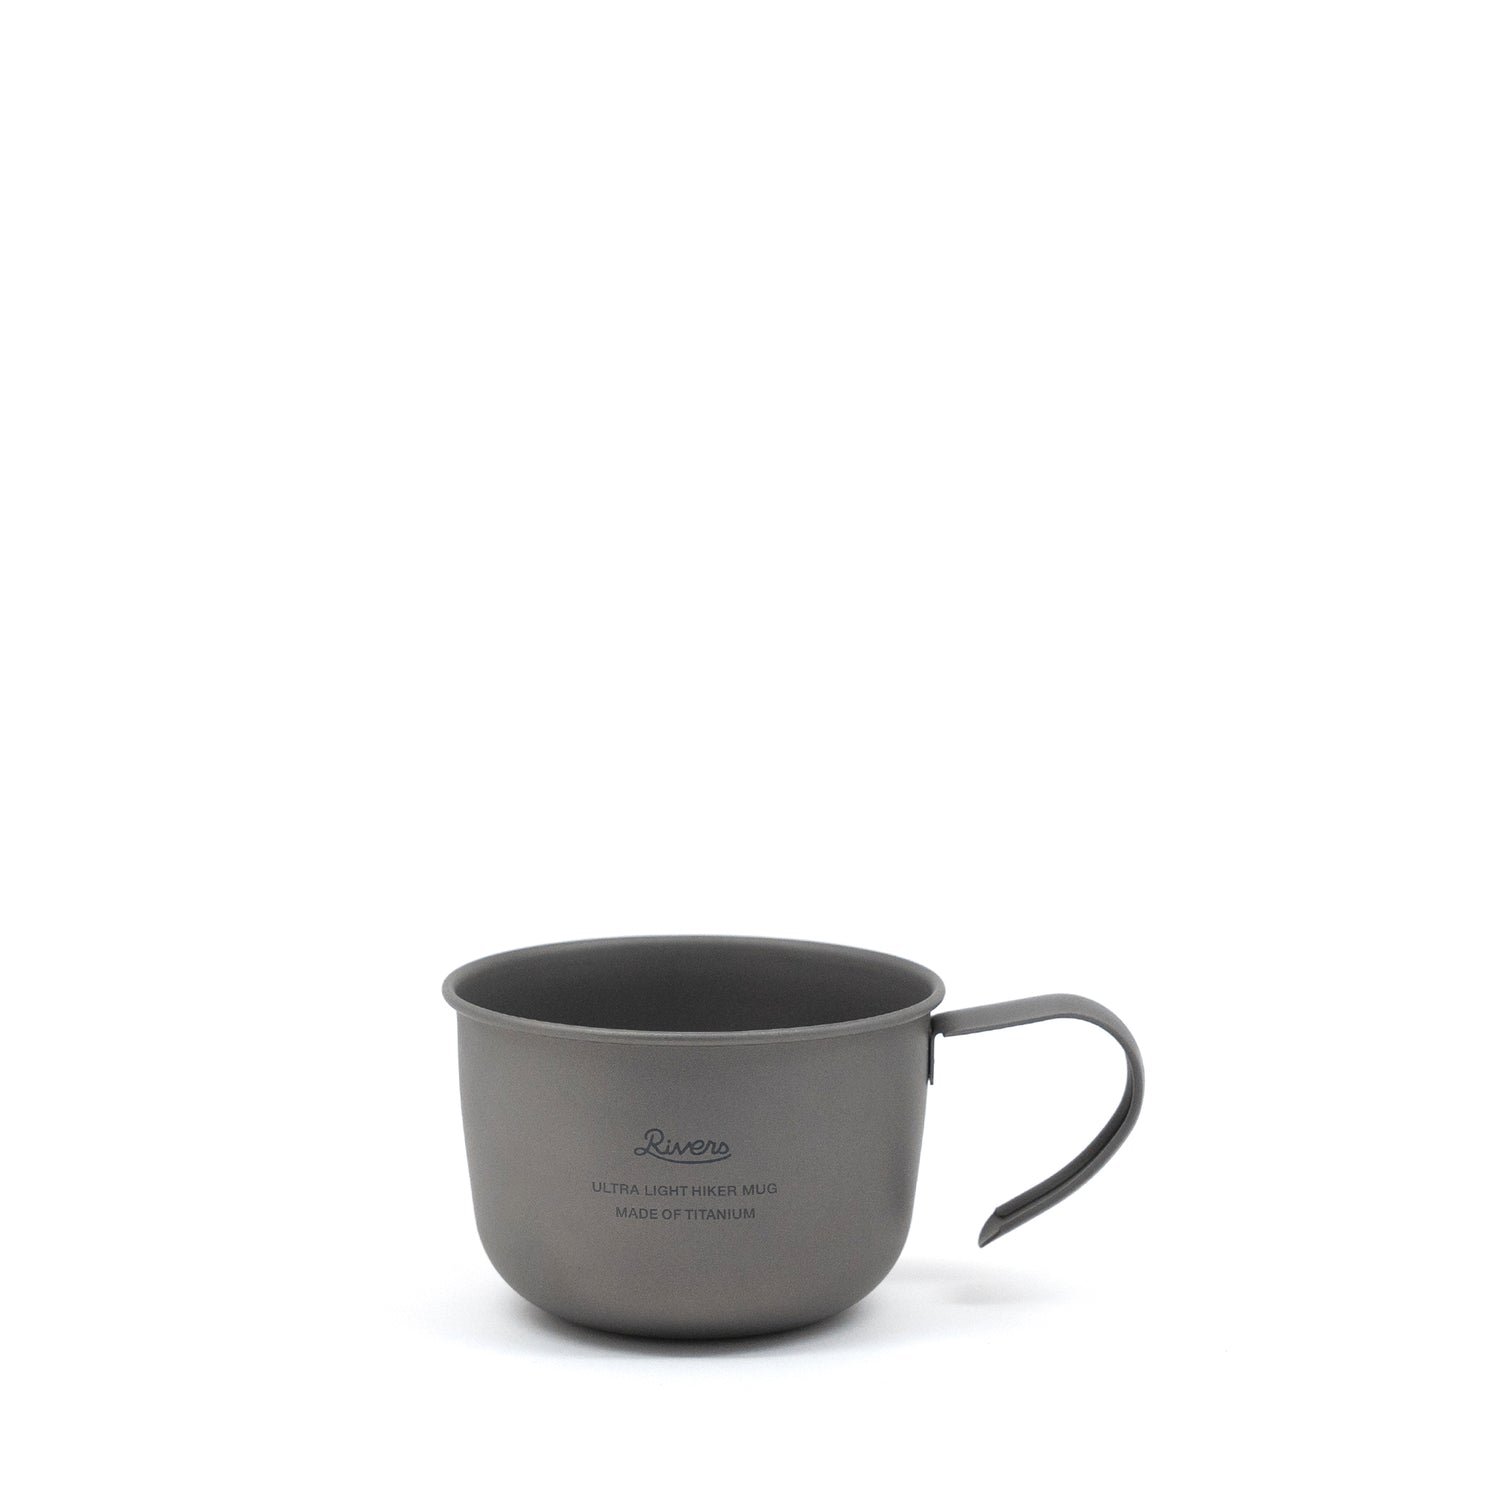 Tumbler (Mug) Made from Coffee Grounds